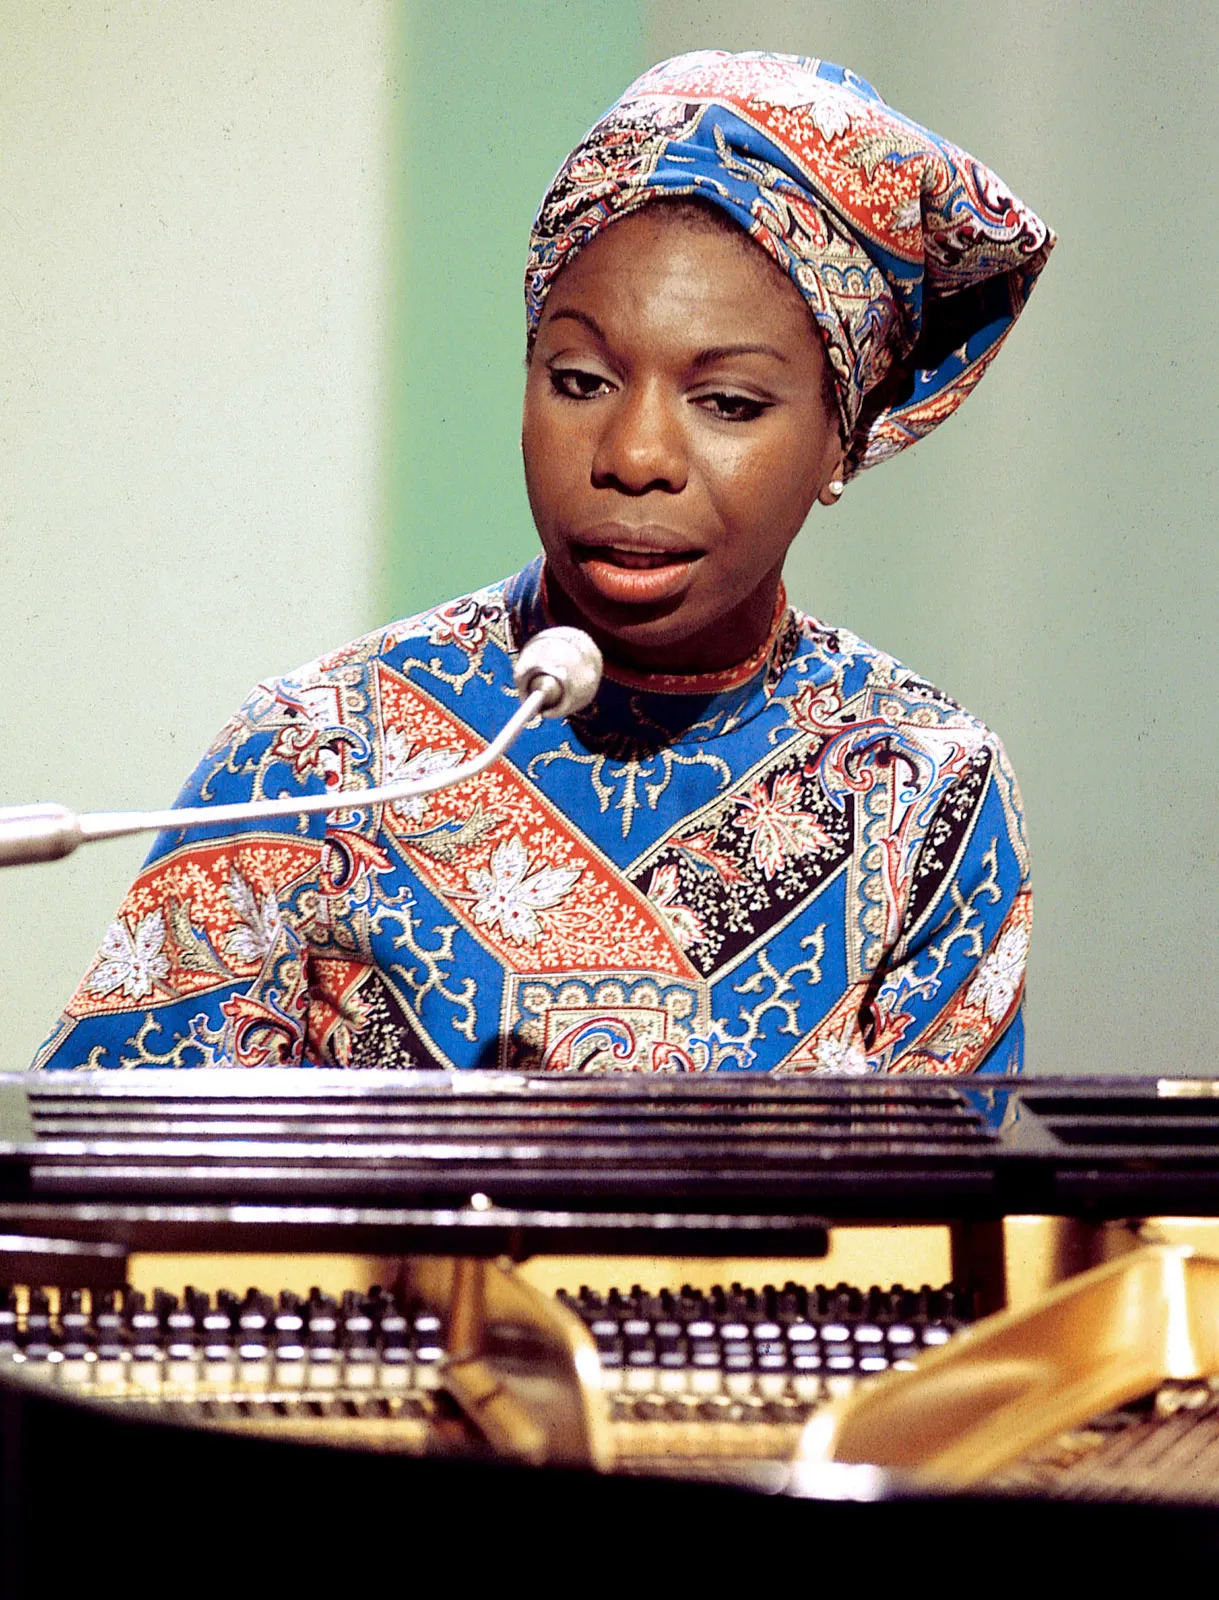 Musician Nina Simone at the piano in 1966